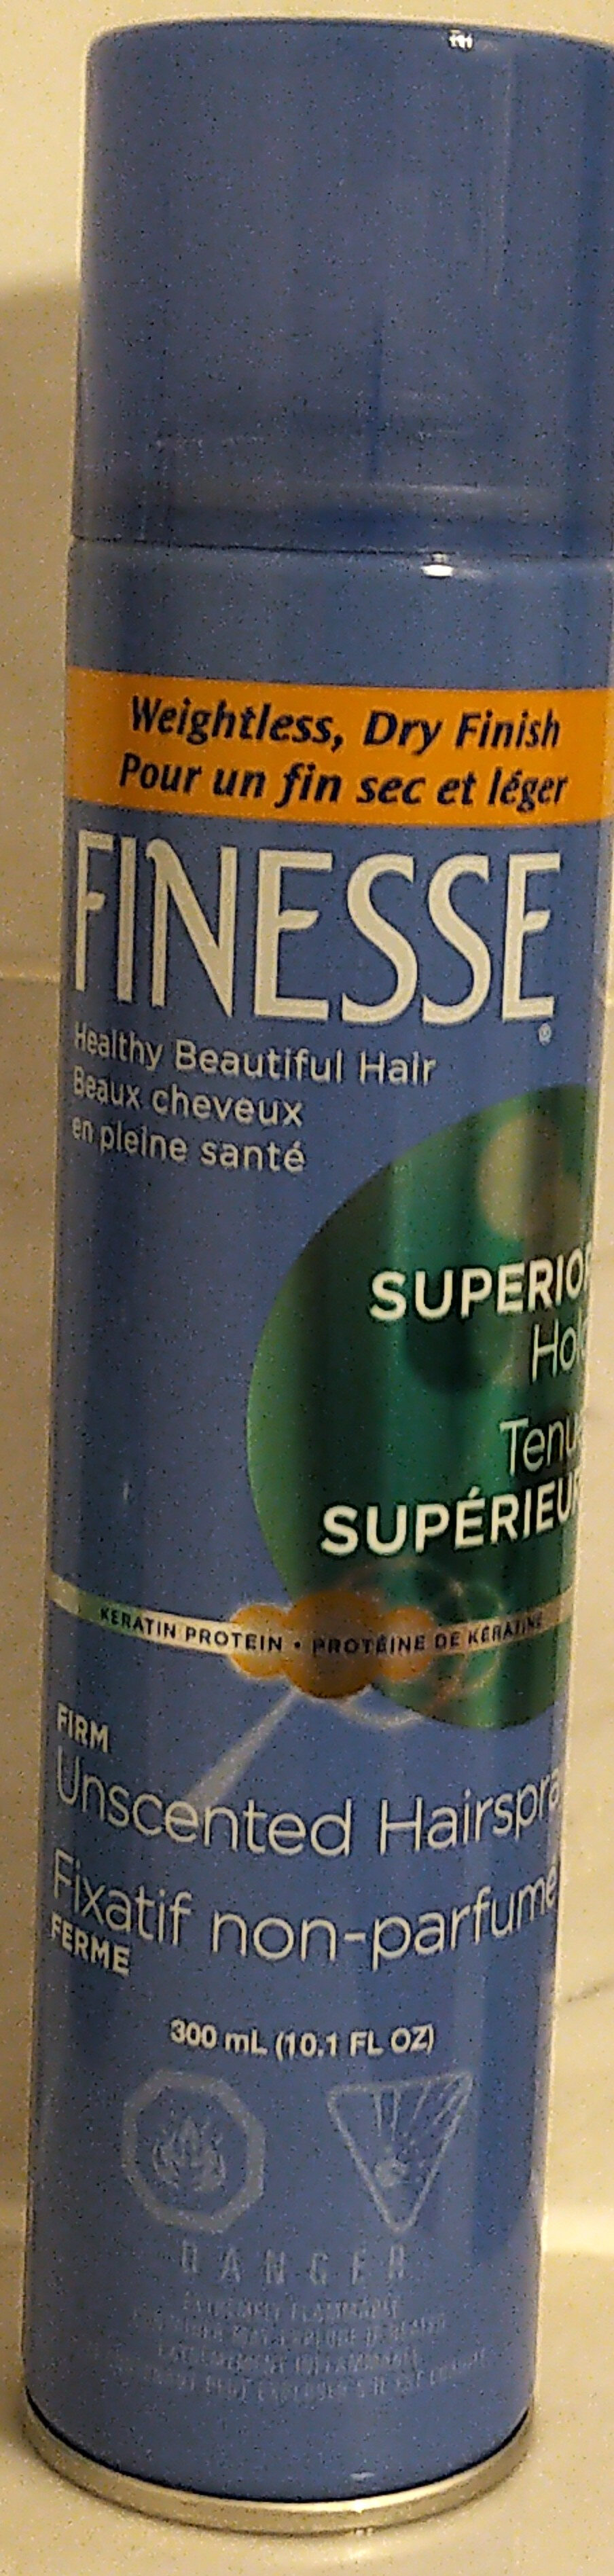 Firm Unscented Hairspray - Produto - en